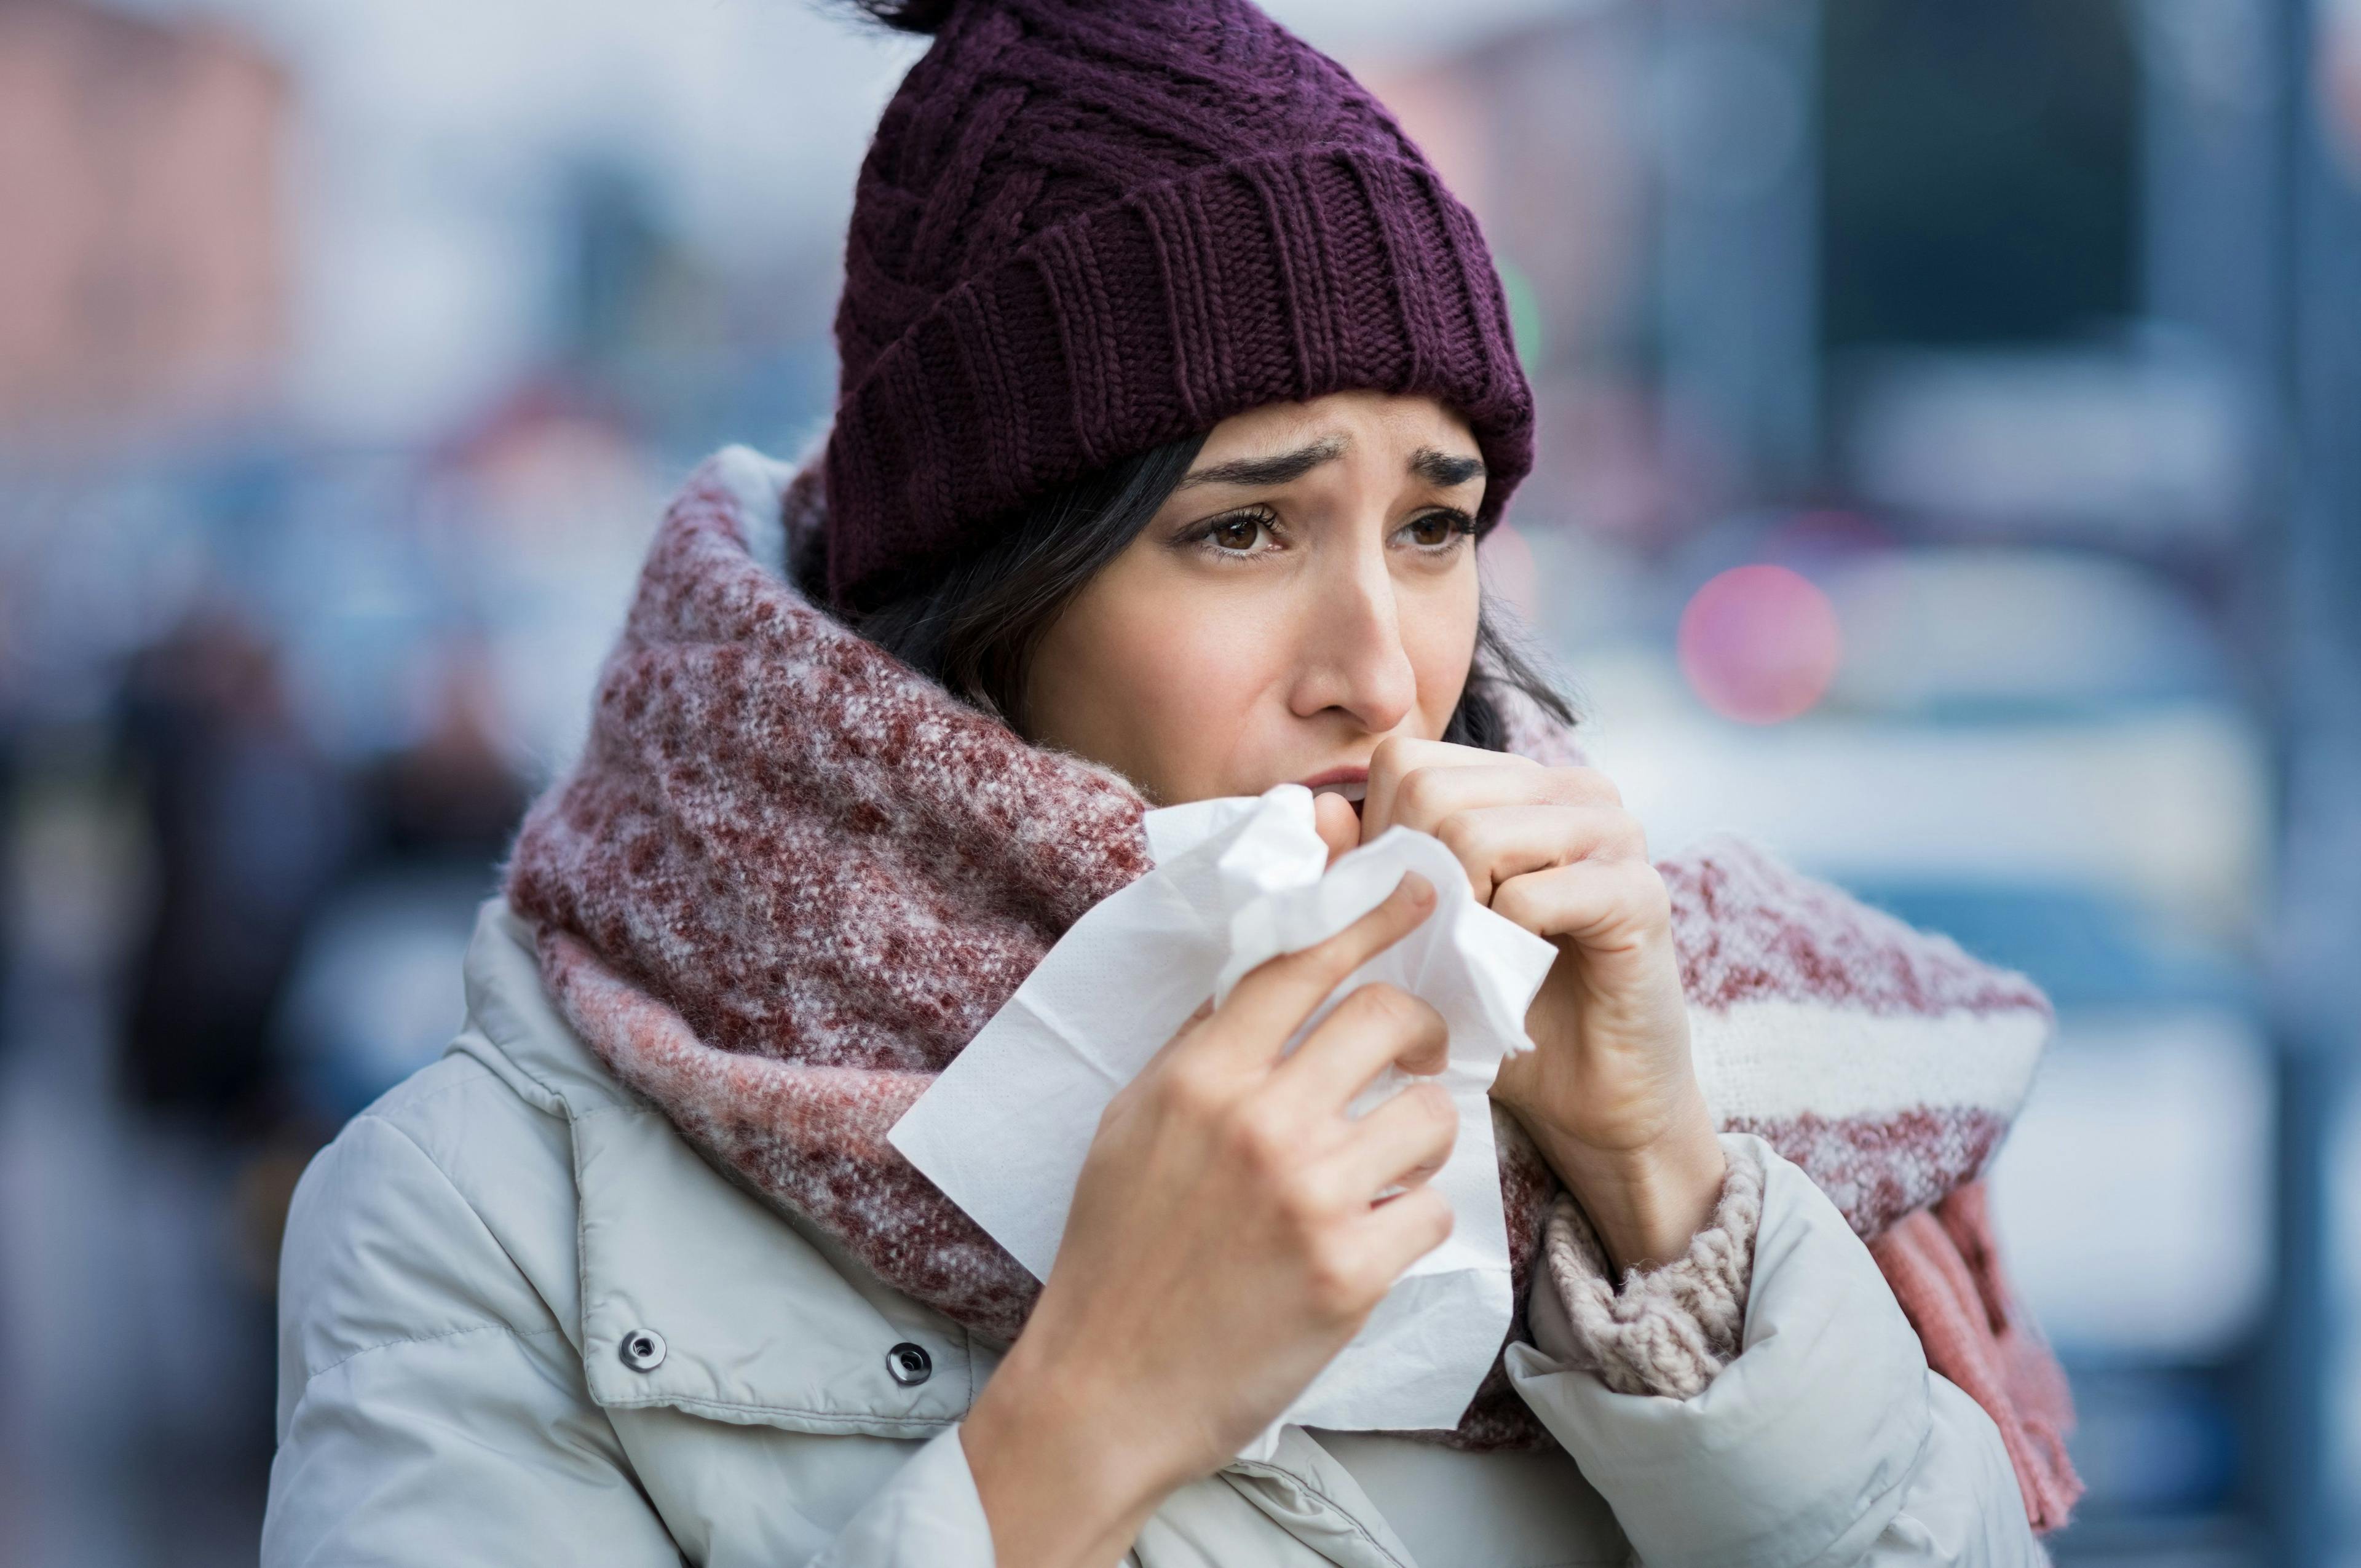 Flu season less severe than last